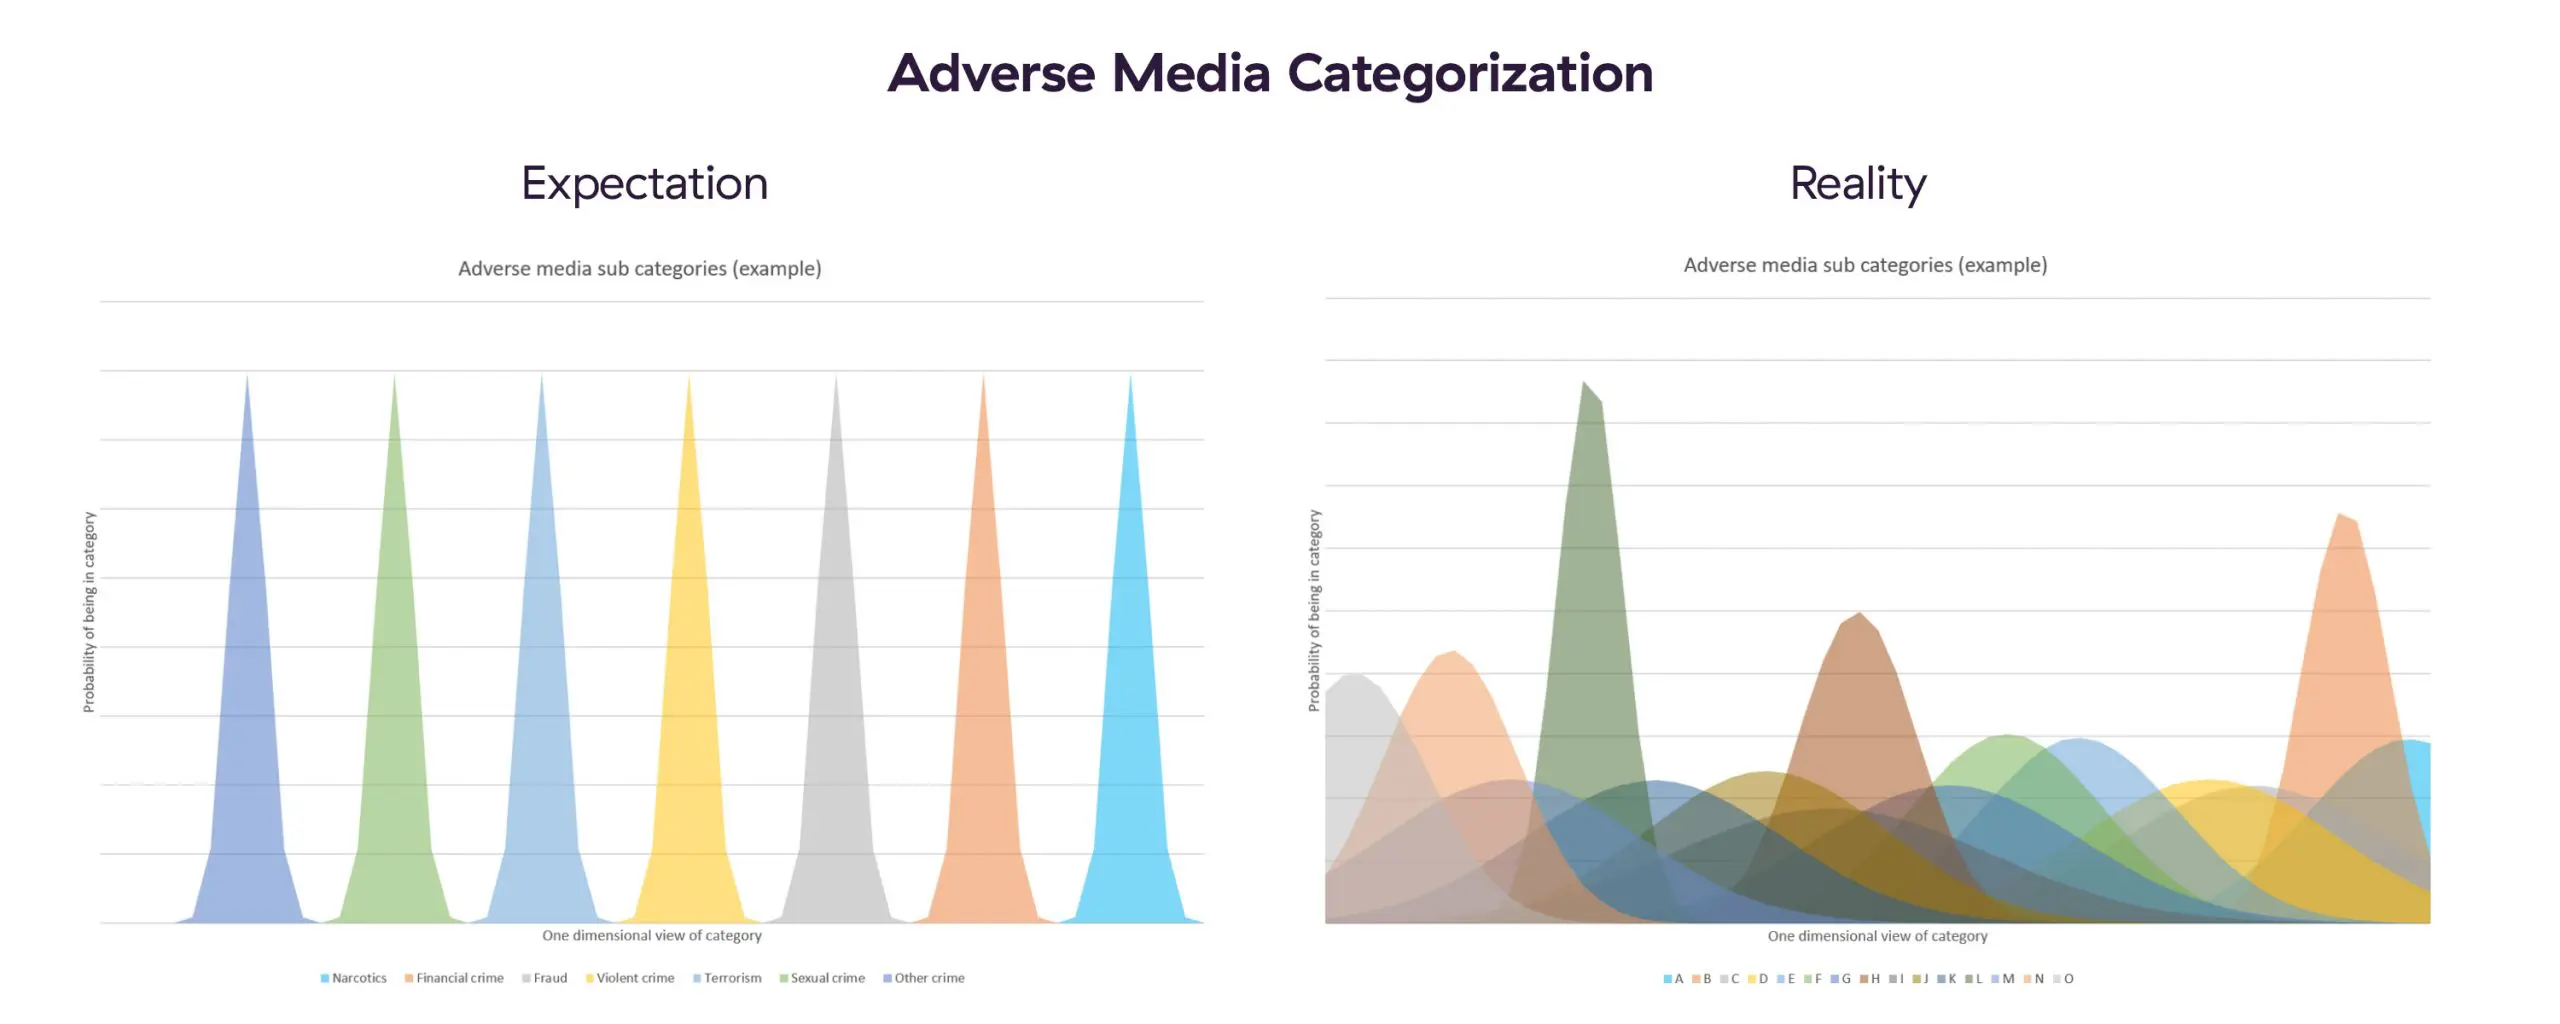 Adverse Media Categorization